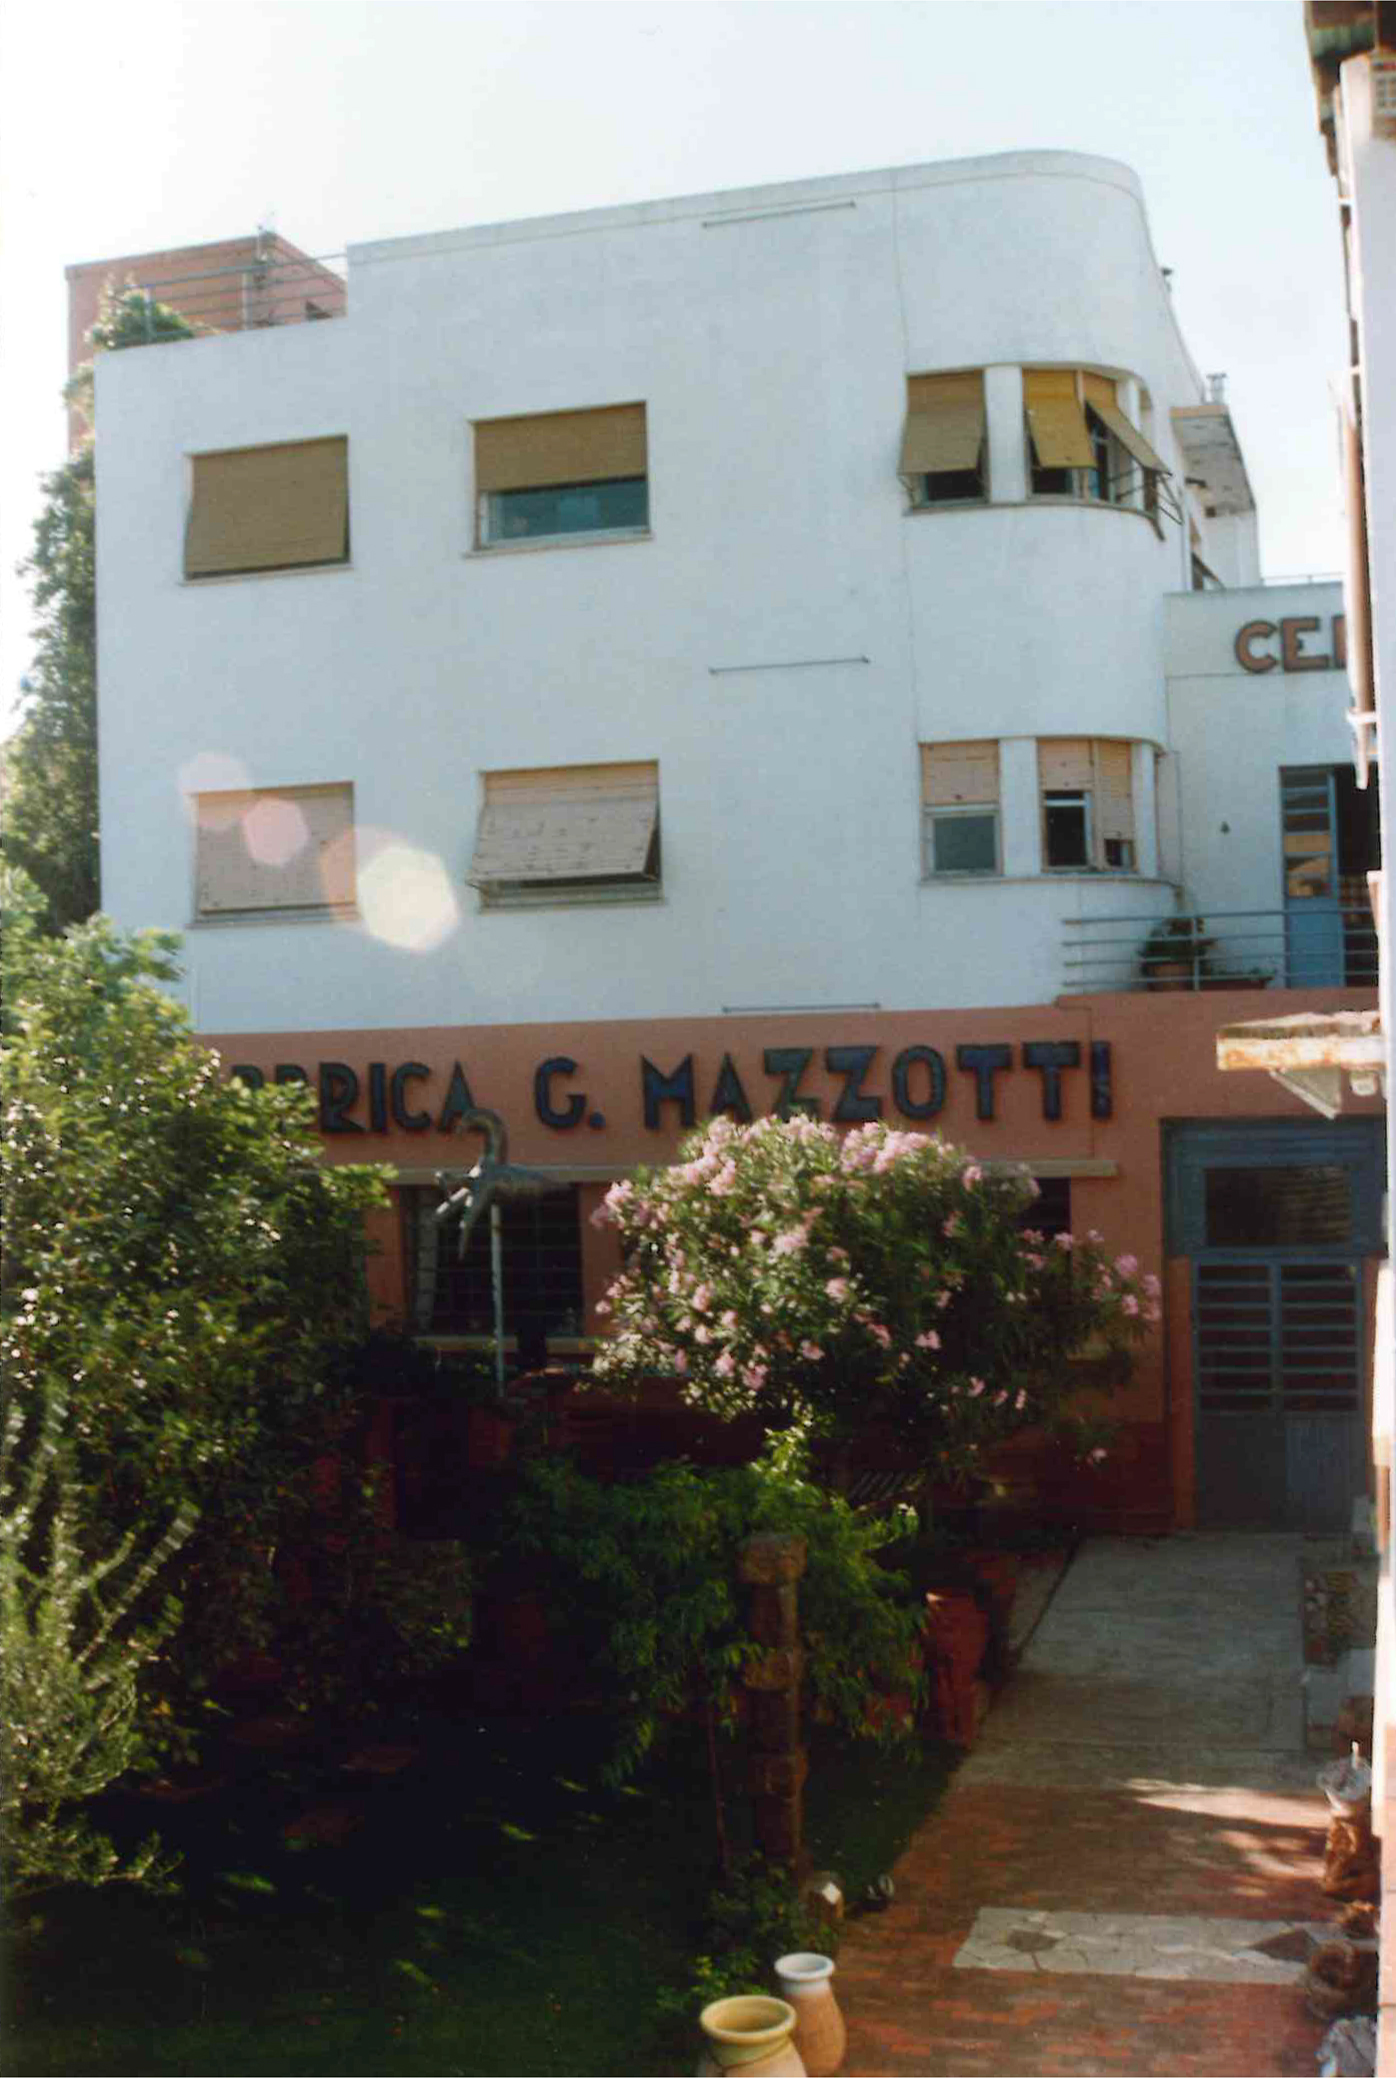 Fabbrica Mazzotti (fabbrica, ceramica) - Albissola Marina (SV)  (XX)